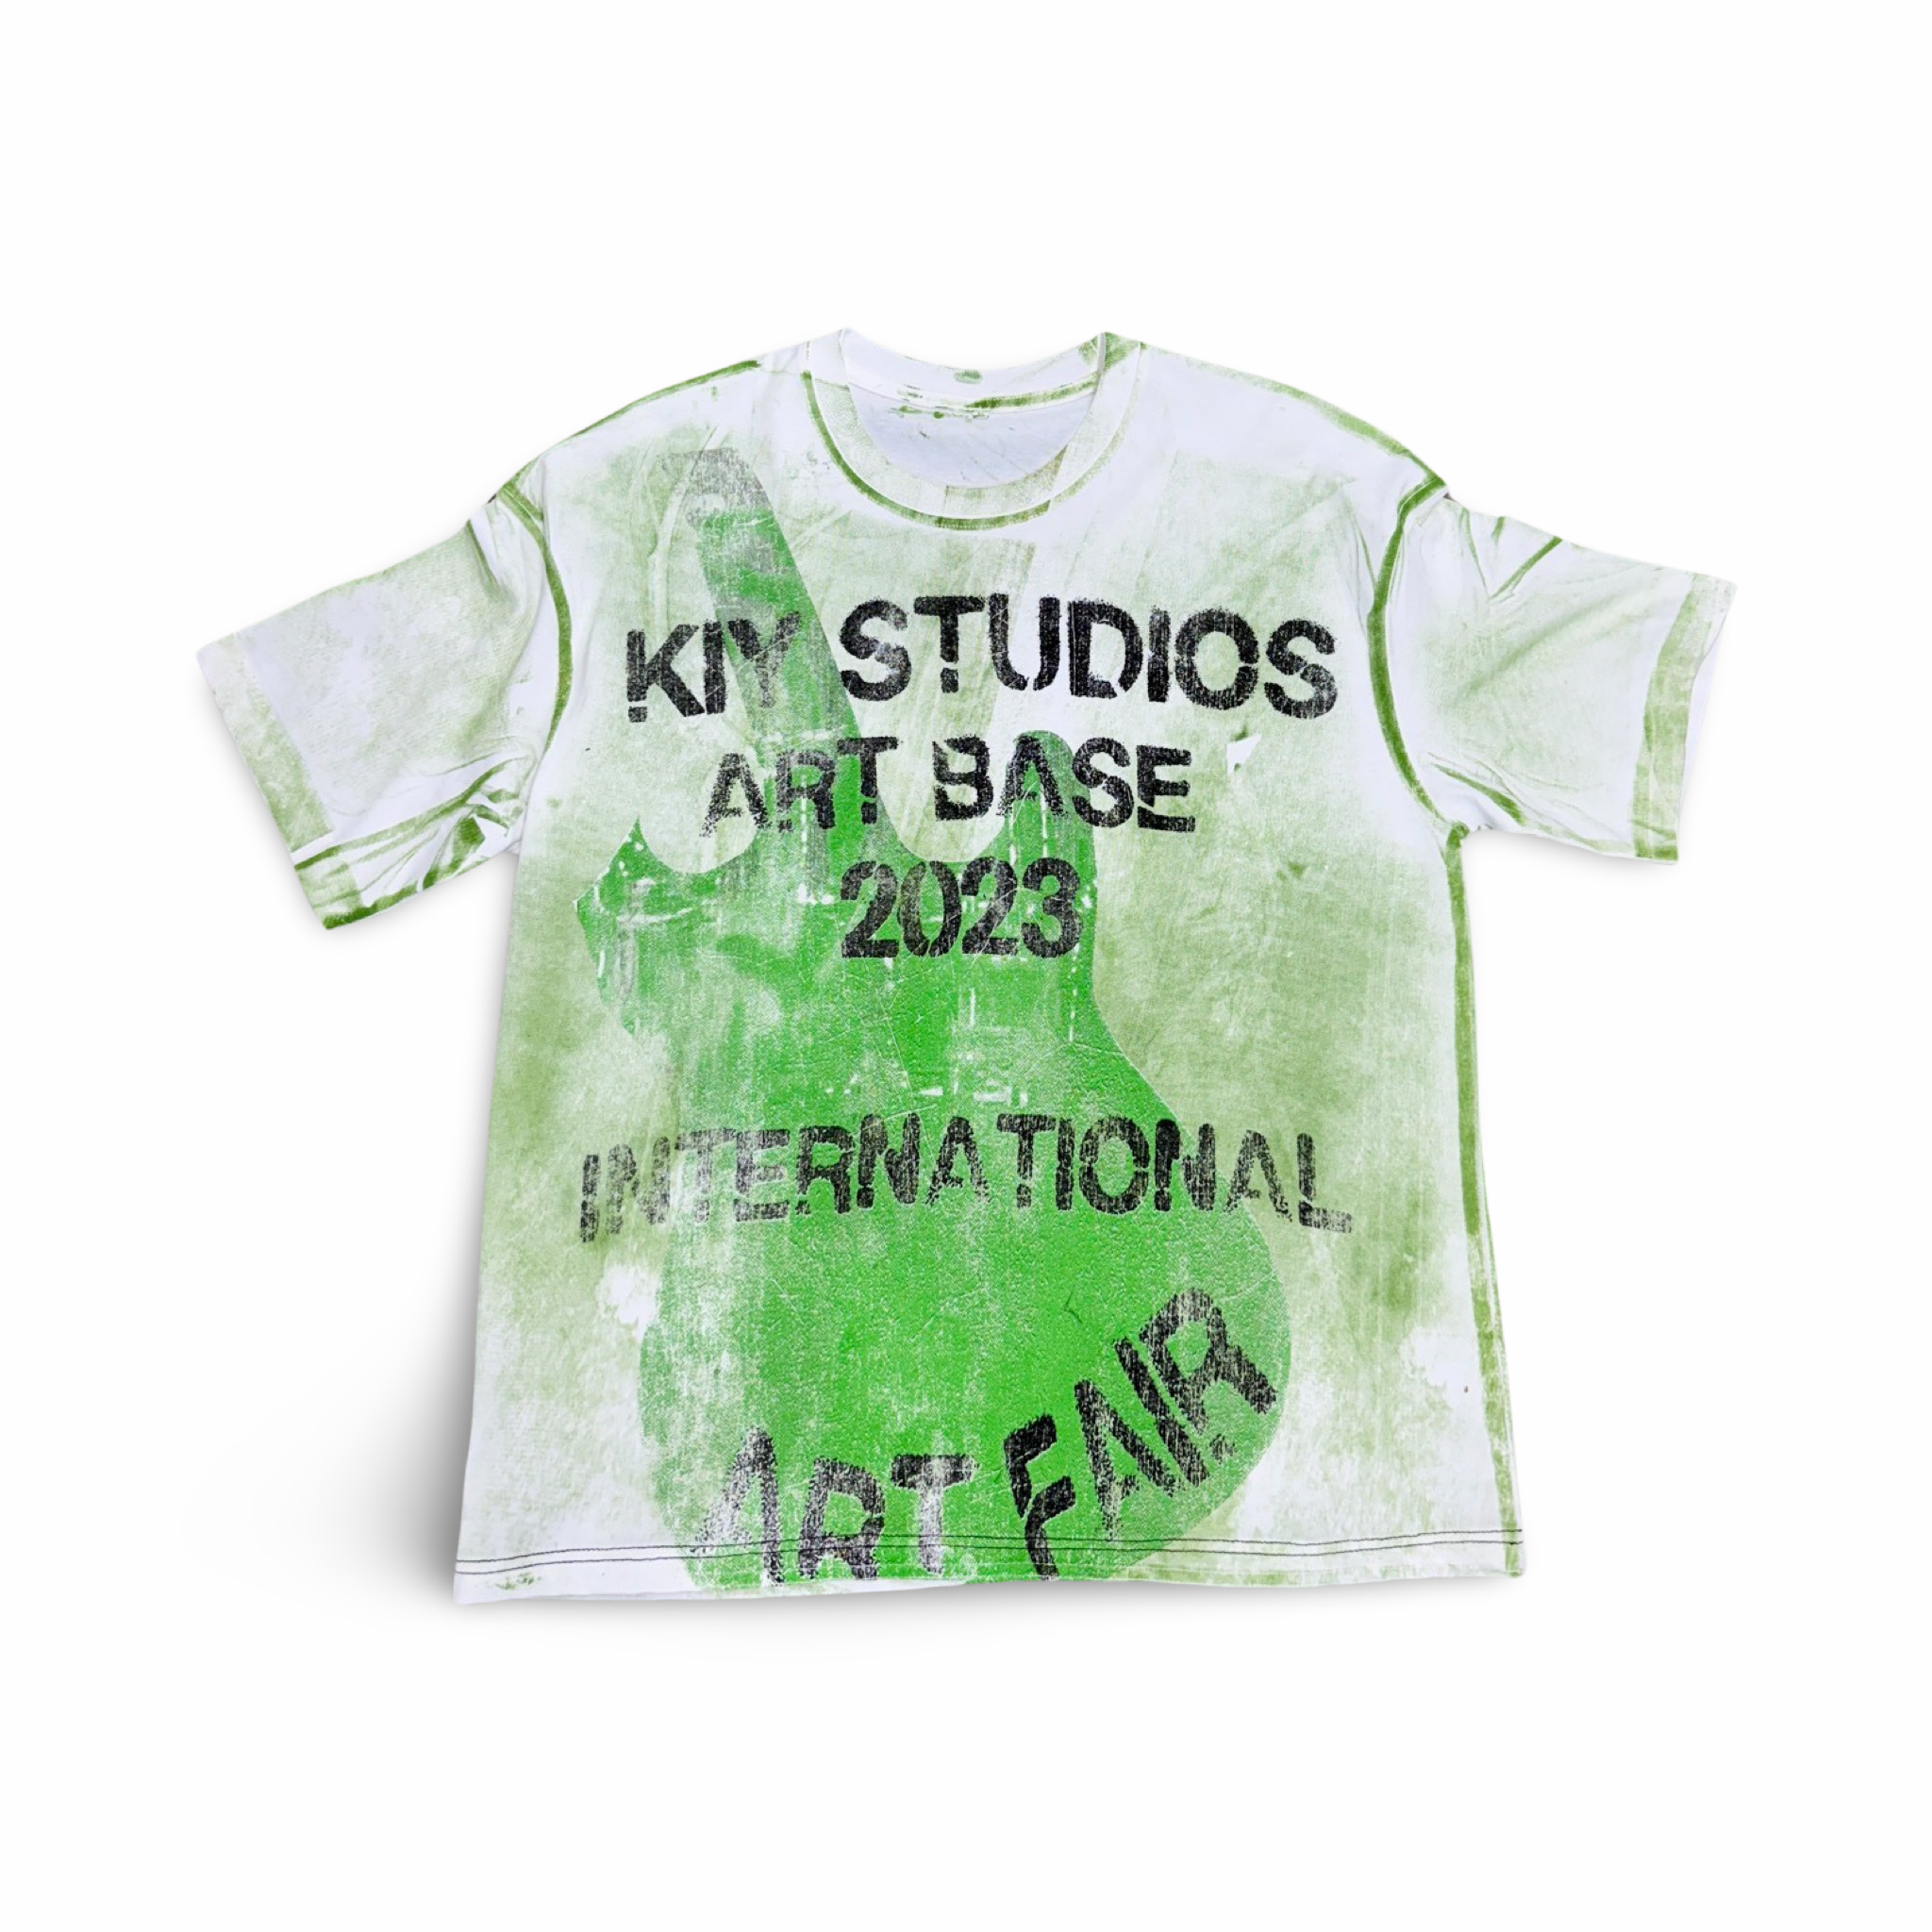 Kiy Studios Art Base International Tee